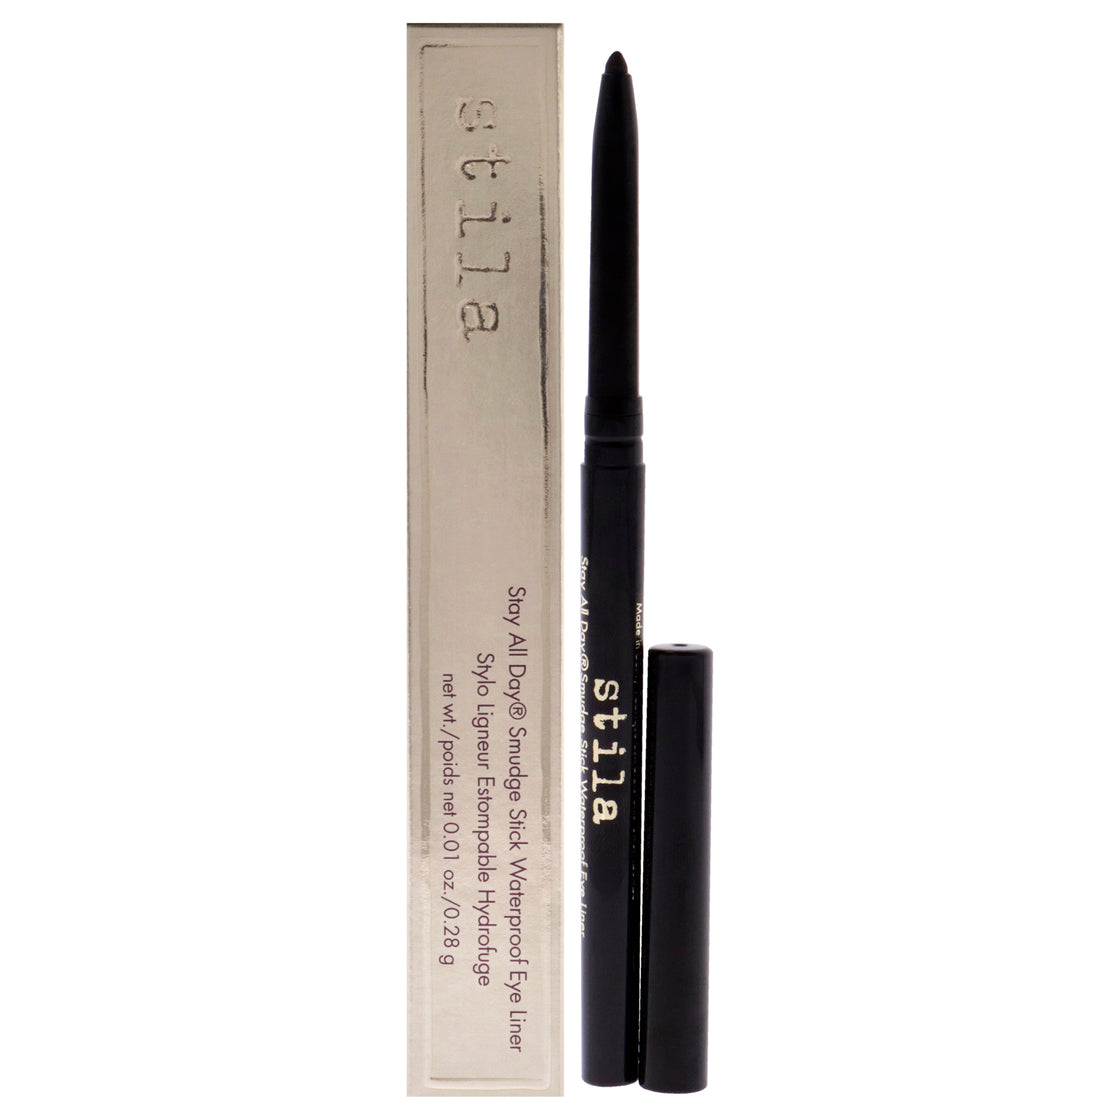 Stay All Day Smudge Stick Waterproof Eye Liner - Damsel by Stila for Women - 0.01 oz Eyeliner